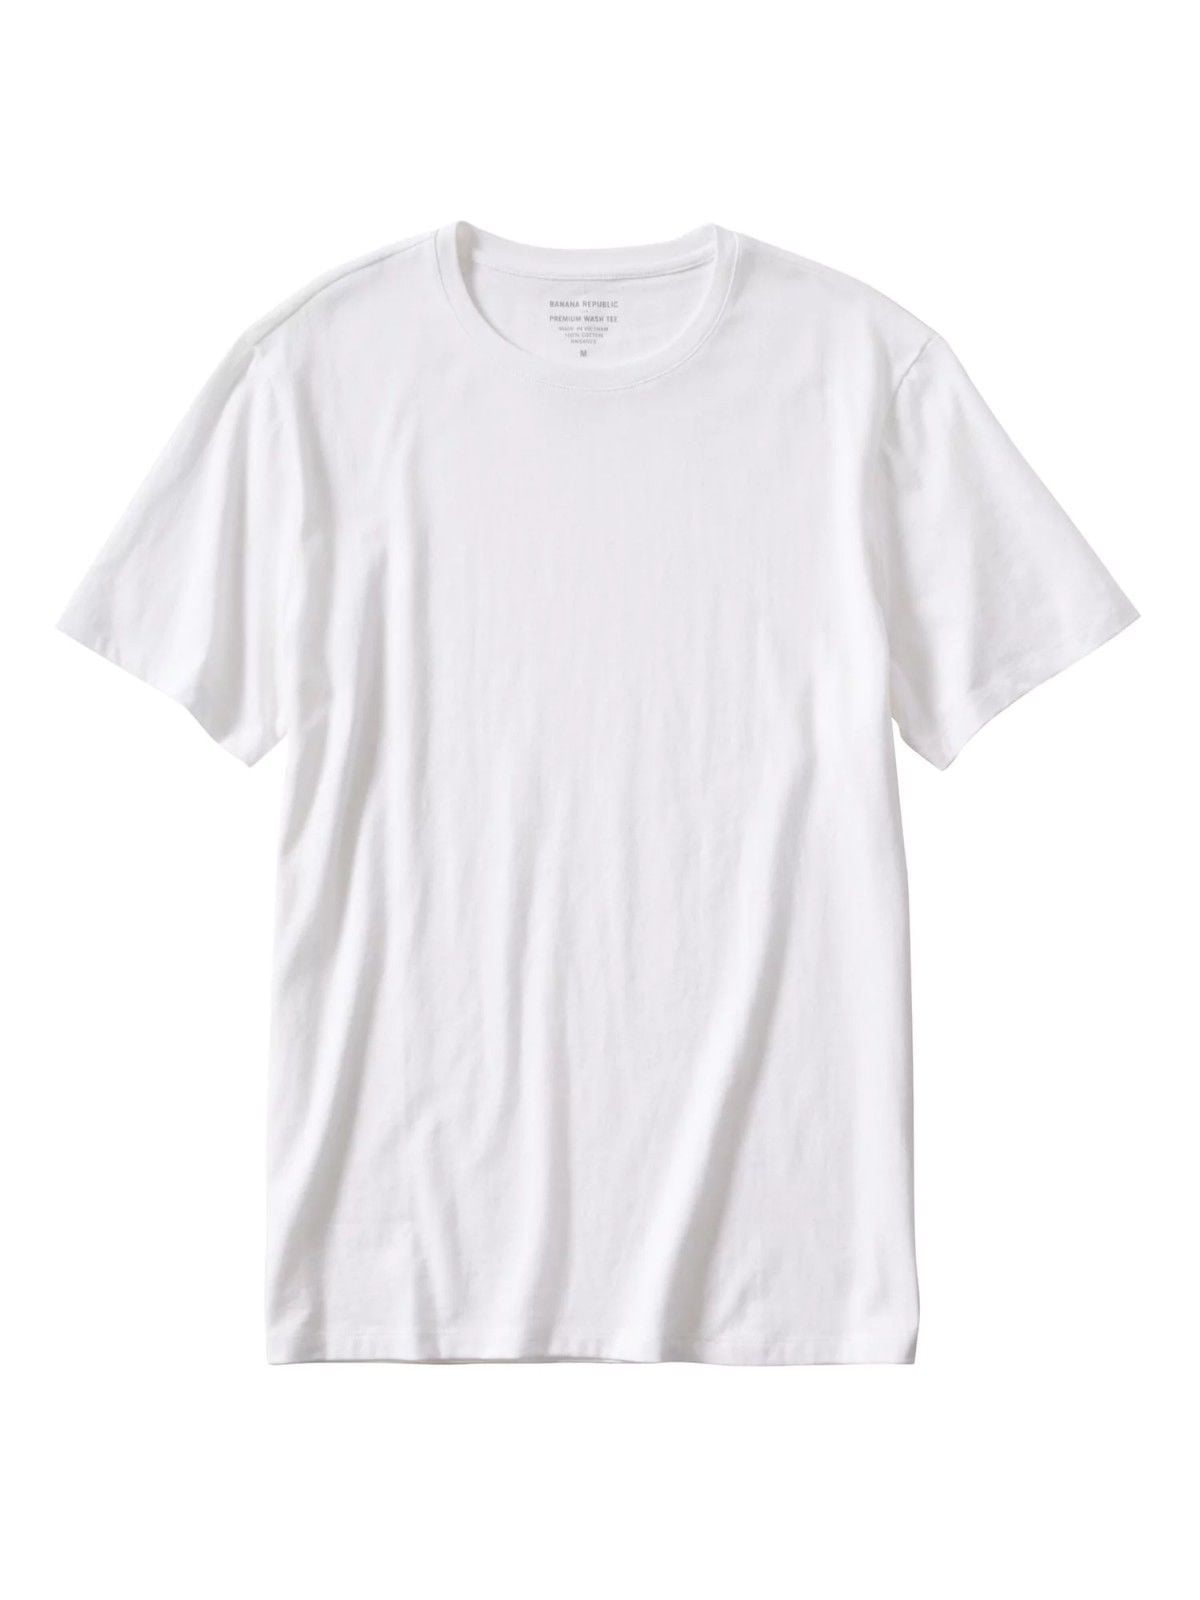 Banana Republic Men's Crew Neck Premium-Wash T Shirts (White, Large ...